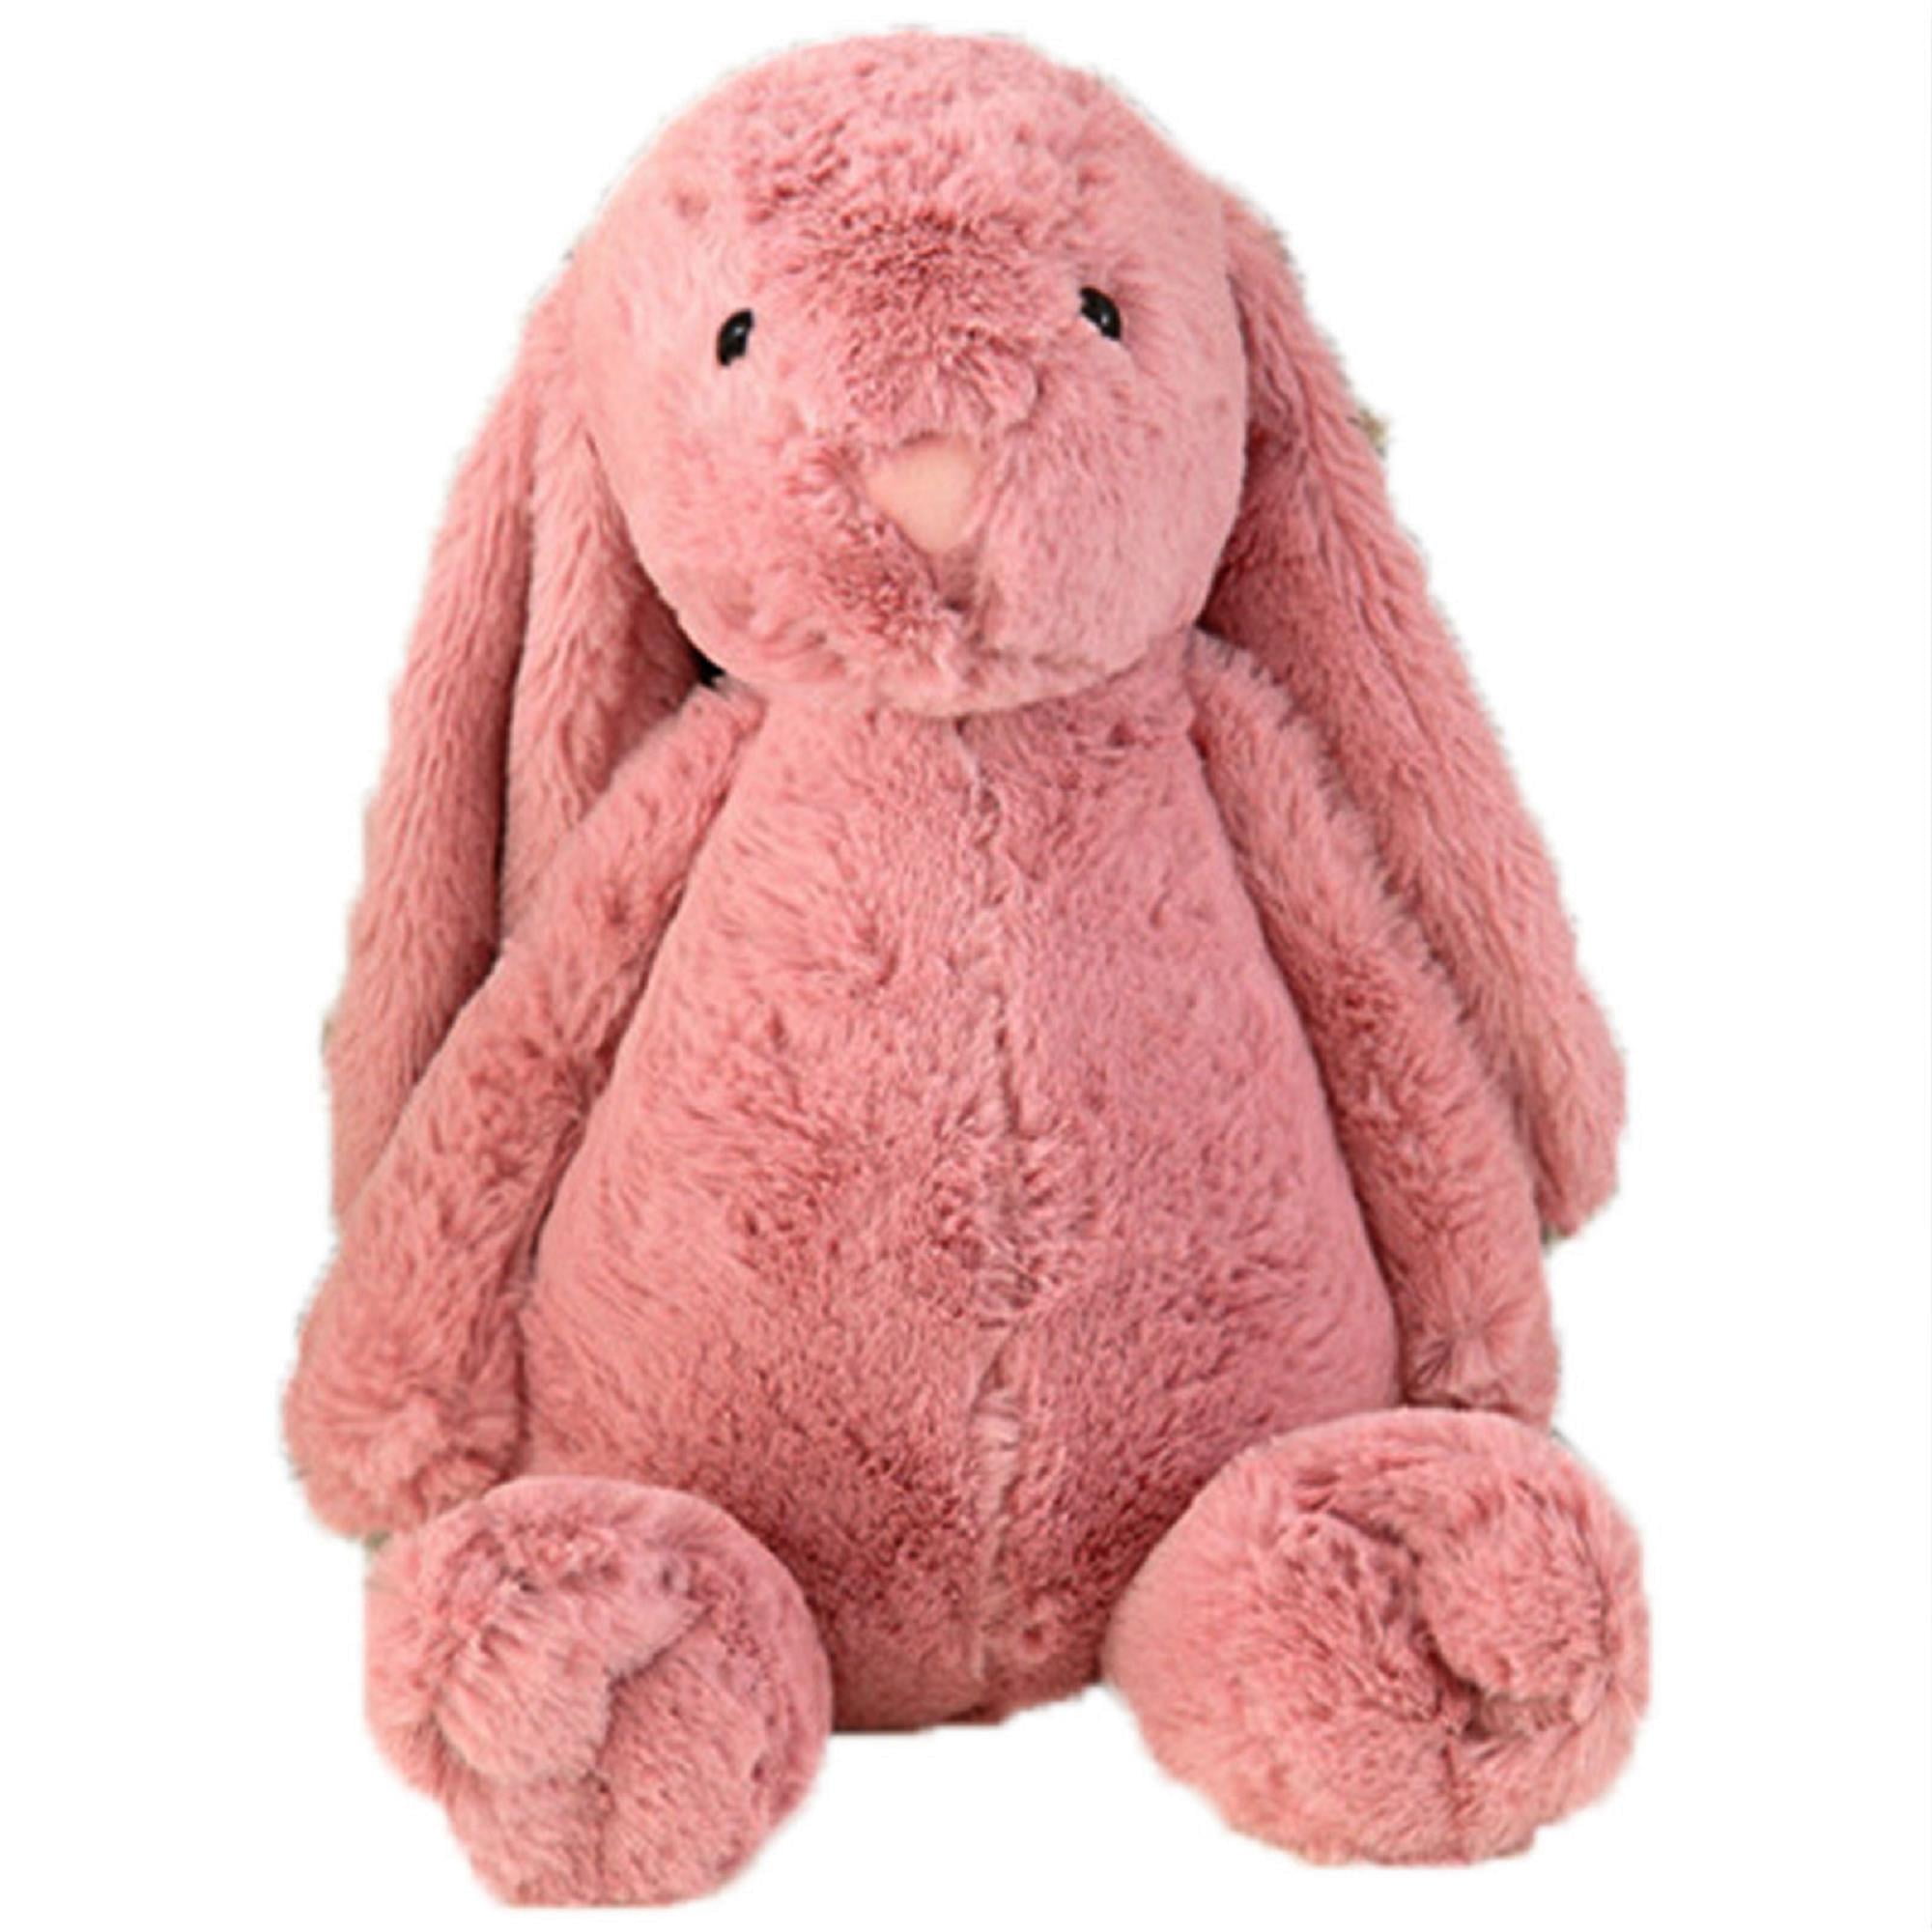 US STOCK Bunny Soft Plush Toys Rabbit Stuffed Animal Baby Kids Gift Animals Doll 